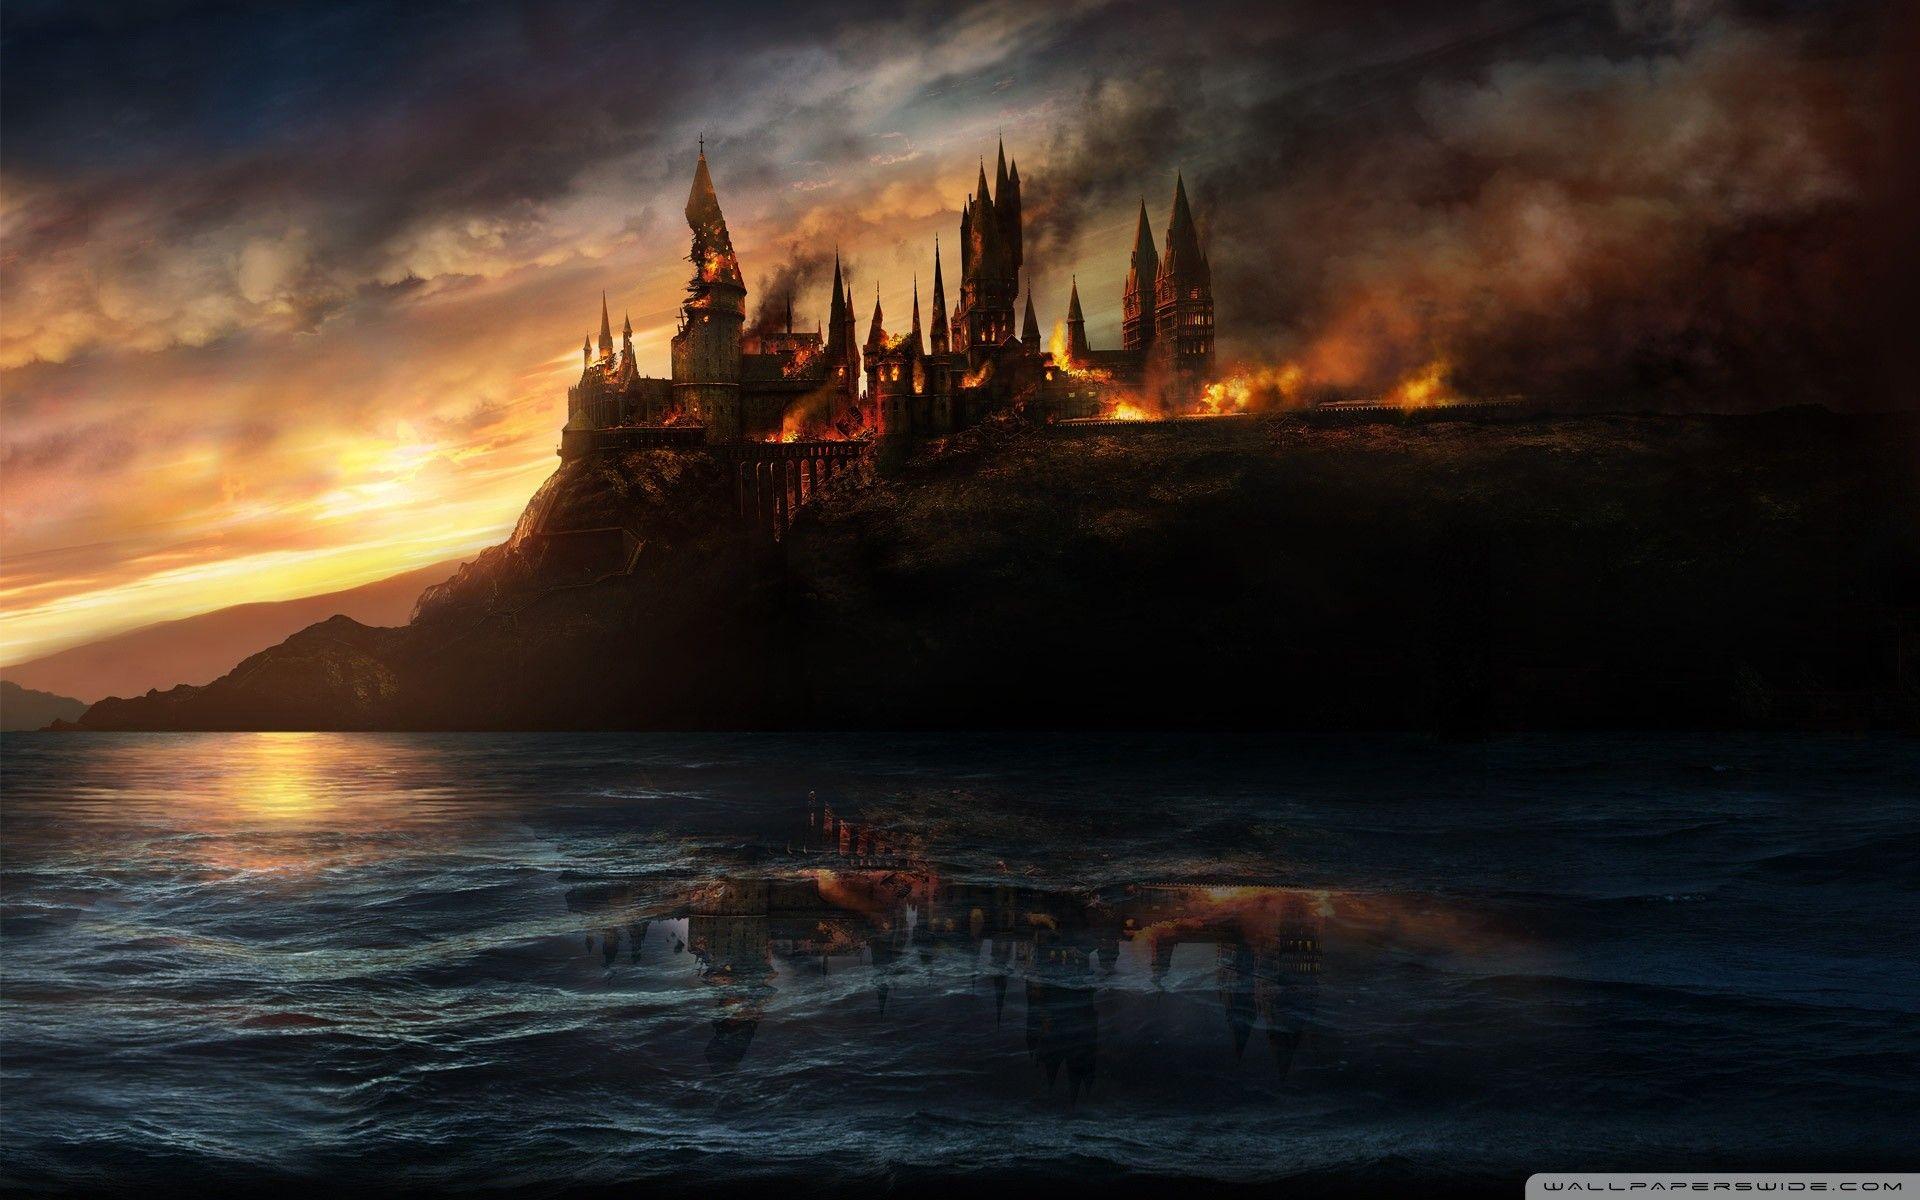 4k Harry Potter Wallpapers - Top Free 4k Harry Potter Backgrounds